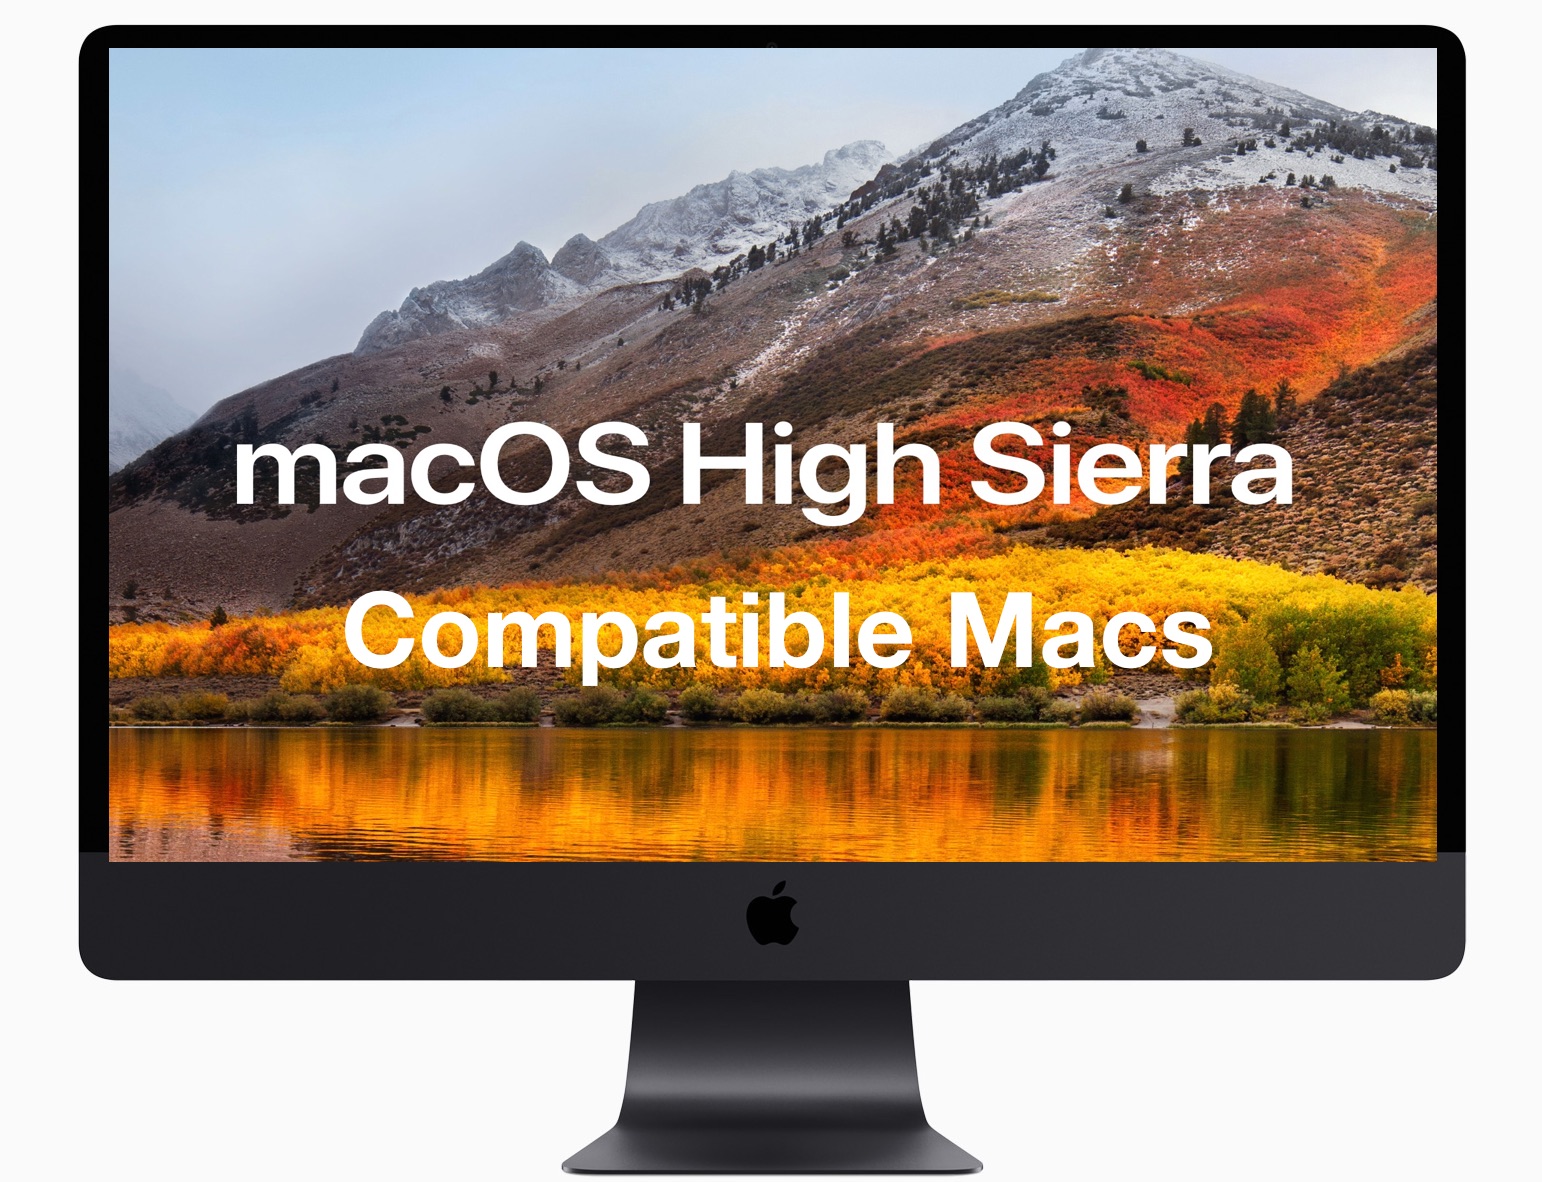 microsoft word for macos high sierra